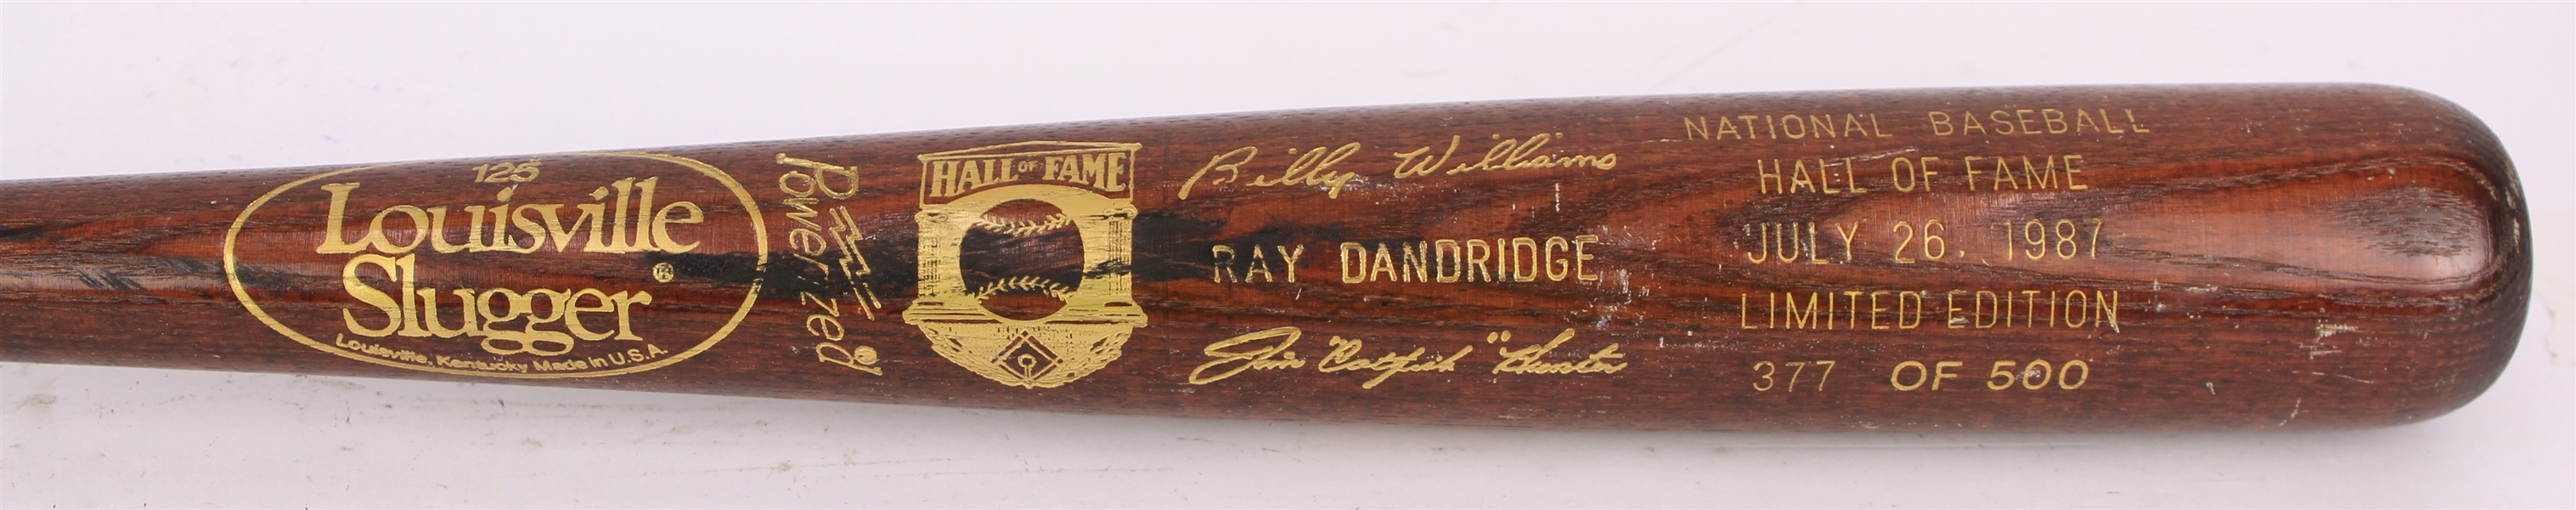 1987 MLB Hall of Fame Induction Class Louisville Slugger Commemorative Bat 377/500